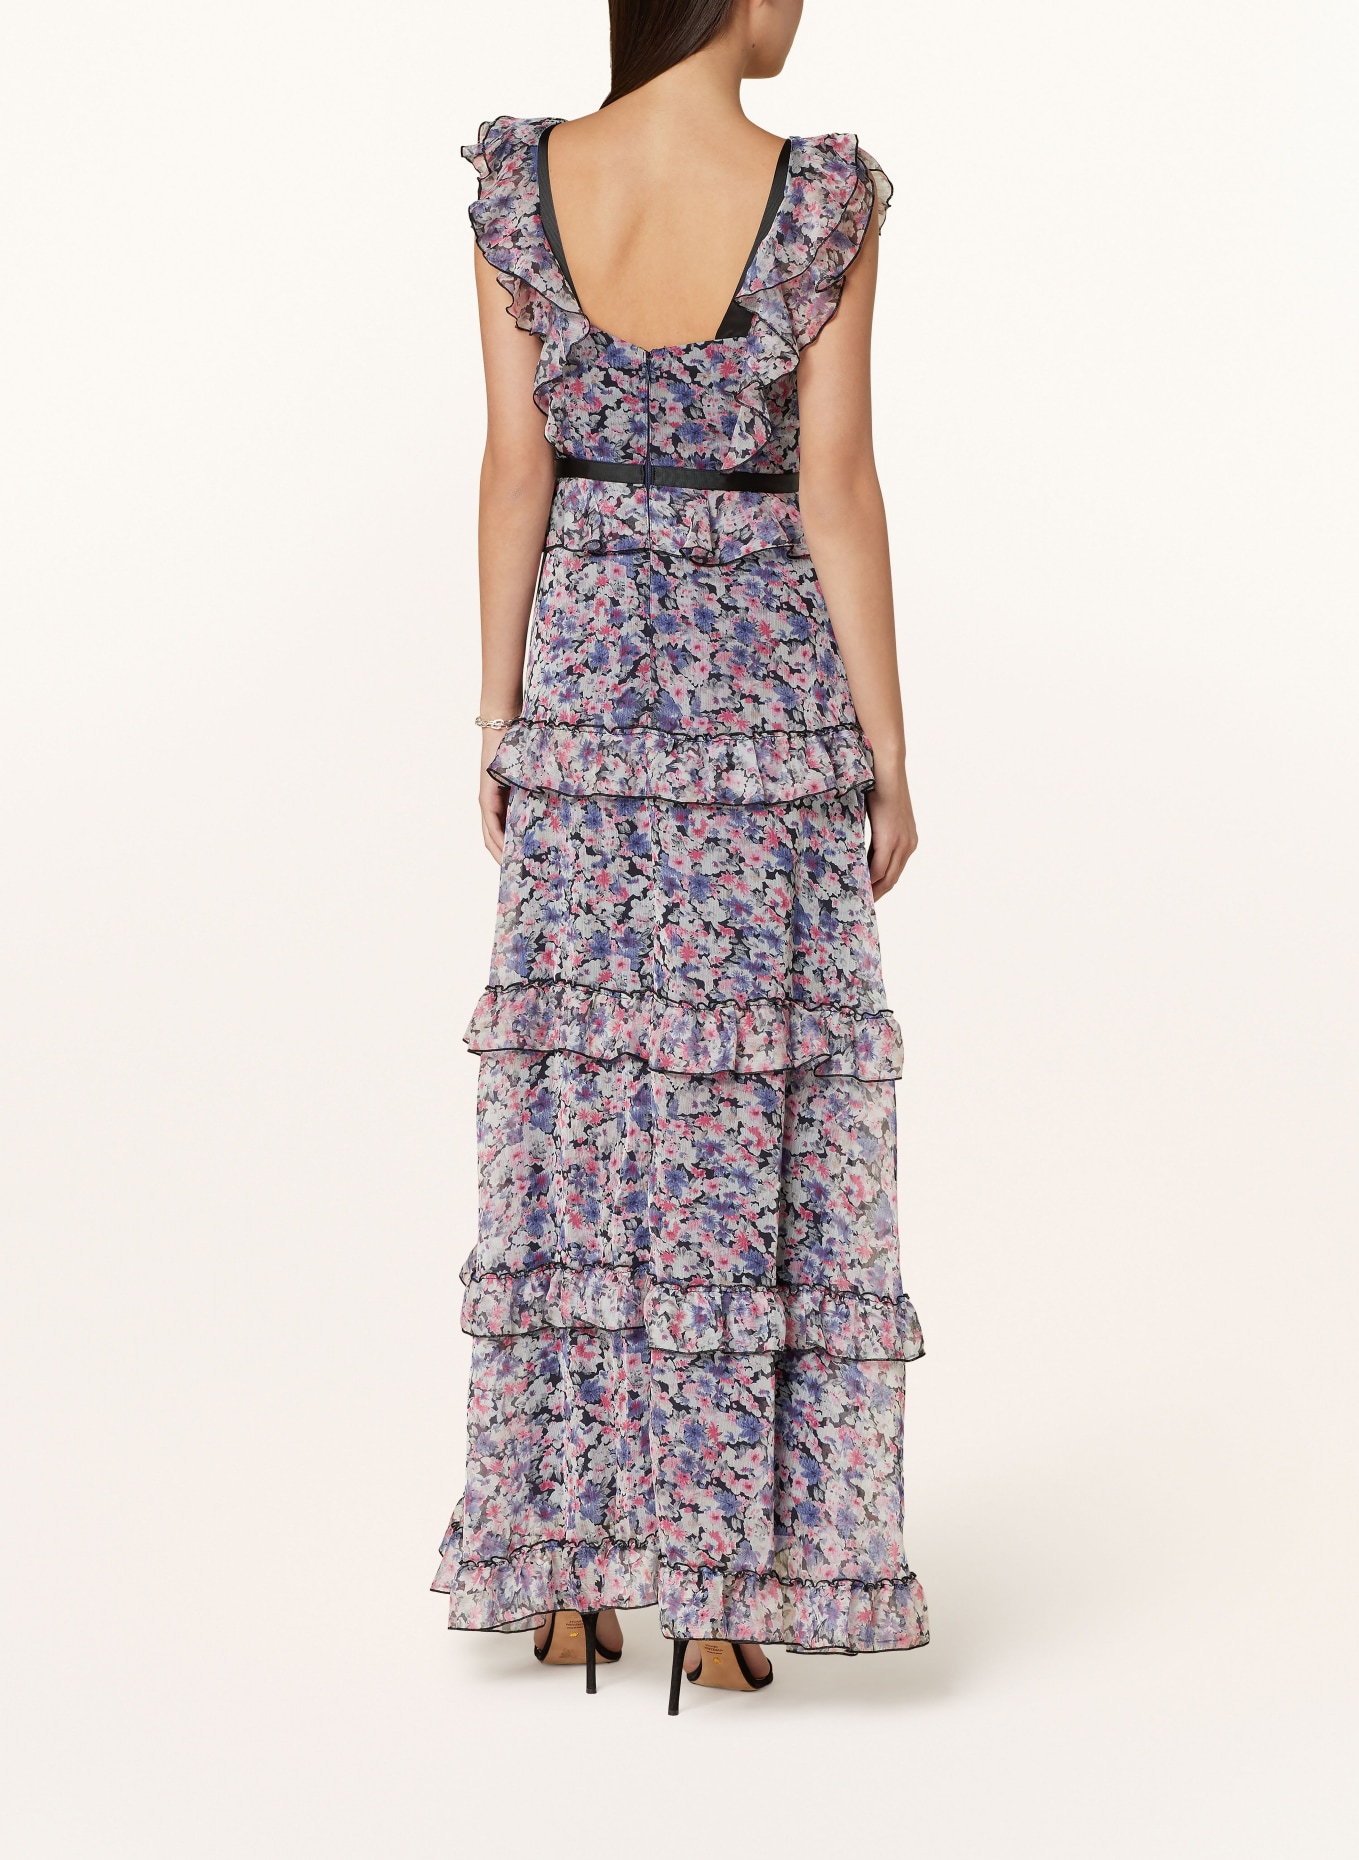 LIPSY Kleid DITSY mit Rüschen, Farbe: BLAUGRAU/ ROSA/ CREME (Bild 3)